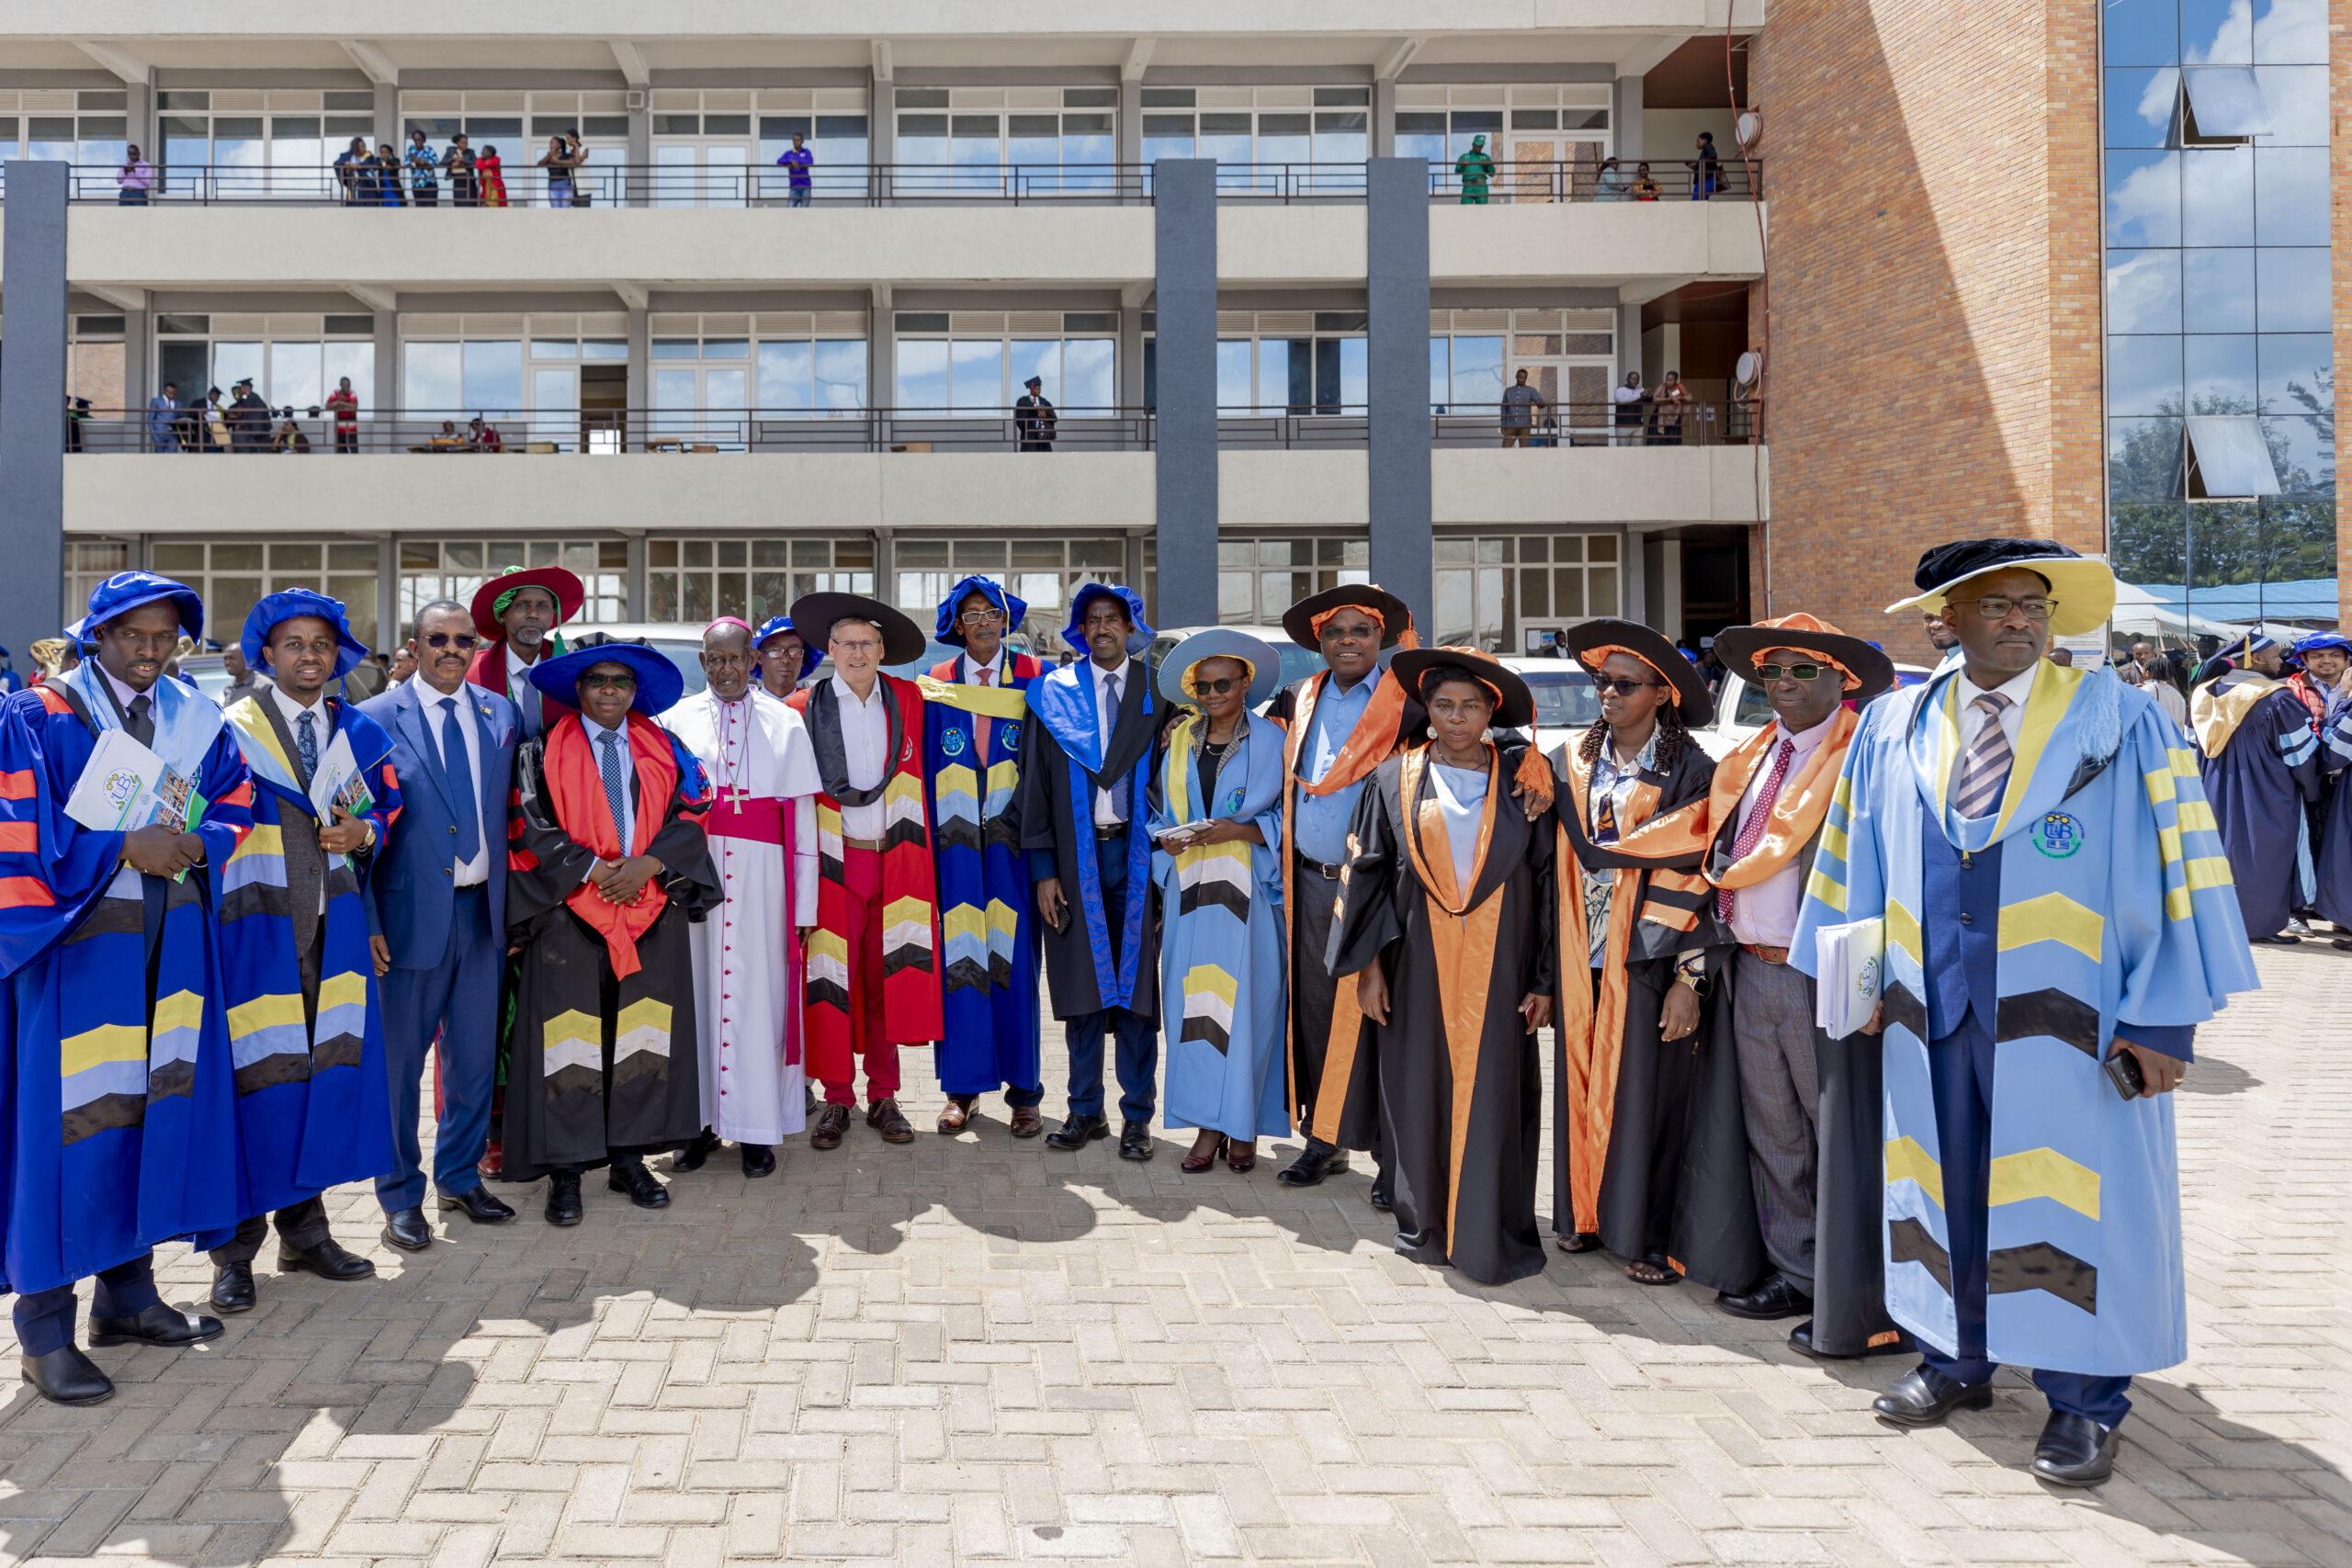 12th Graduation Ceremony at University of Technology and Arts of Byumba (UTAB)